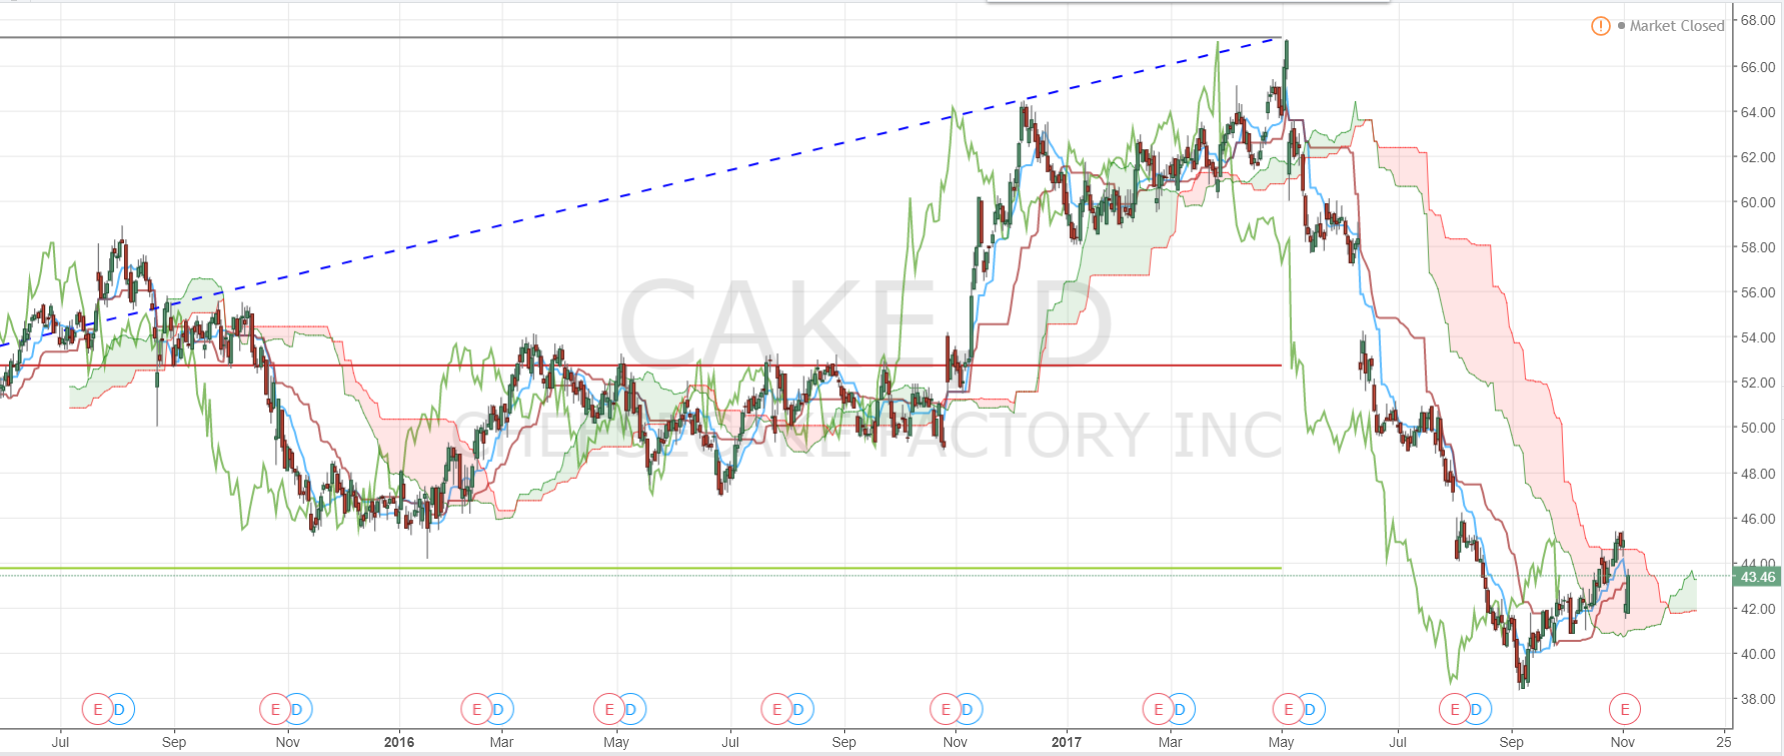 Cheesecake Factory CAKE Stock Technical Analysis - Daily chart